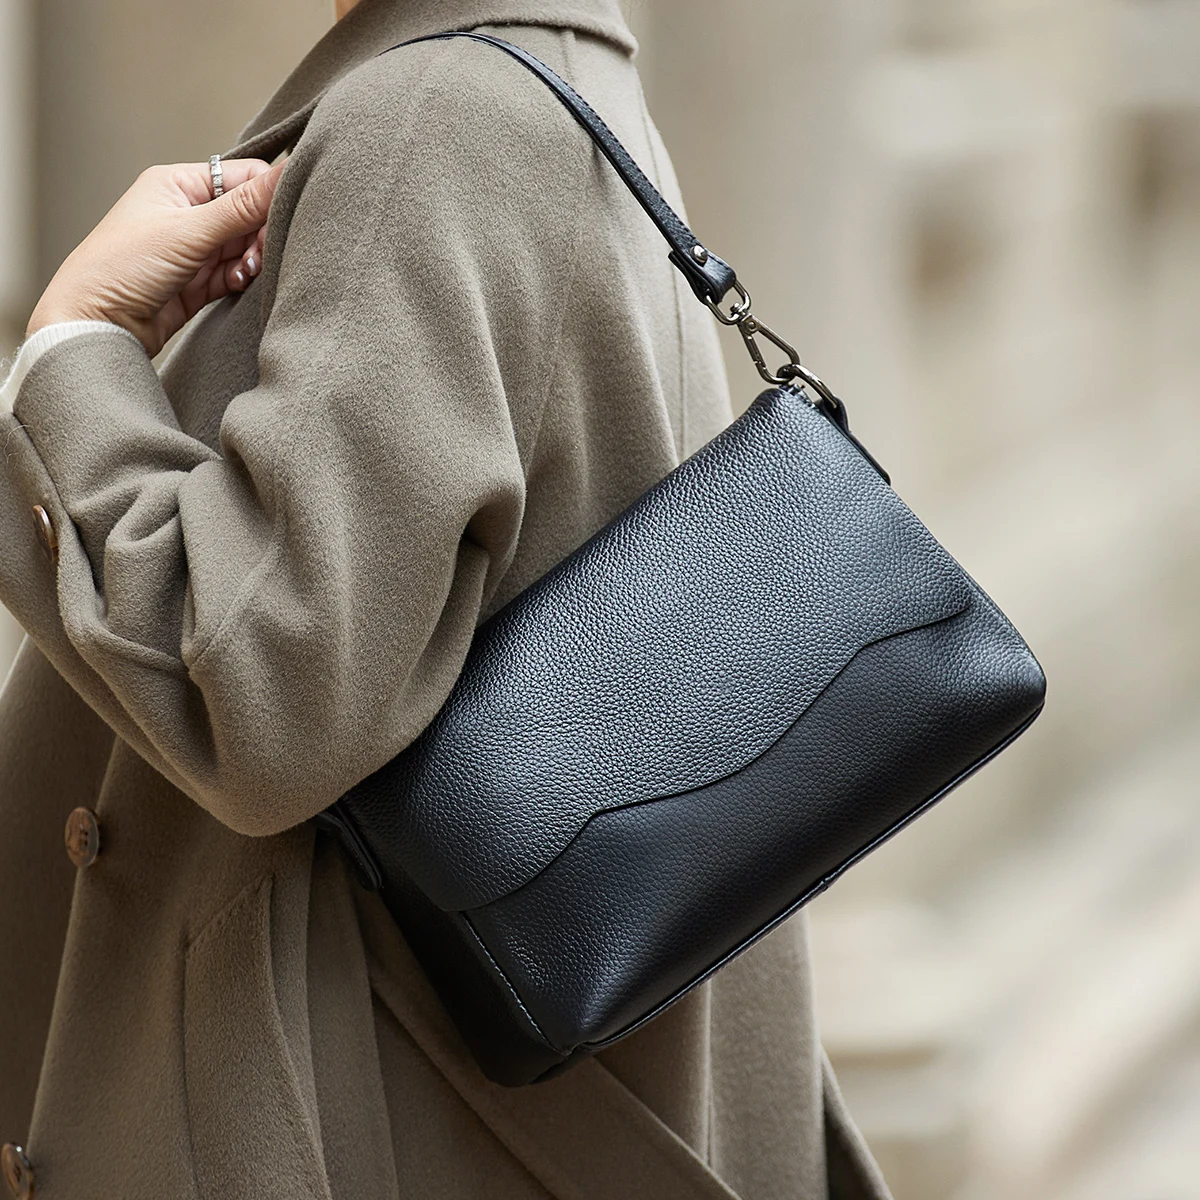 New Luxurious ZOOLER Original Bags 100% Genuine Leather Shoulder Bags Fashion Women Messenger Bag Colors#sc1502